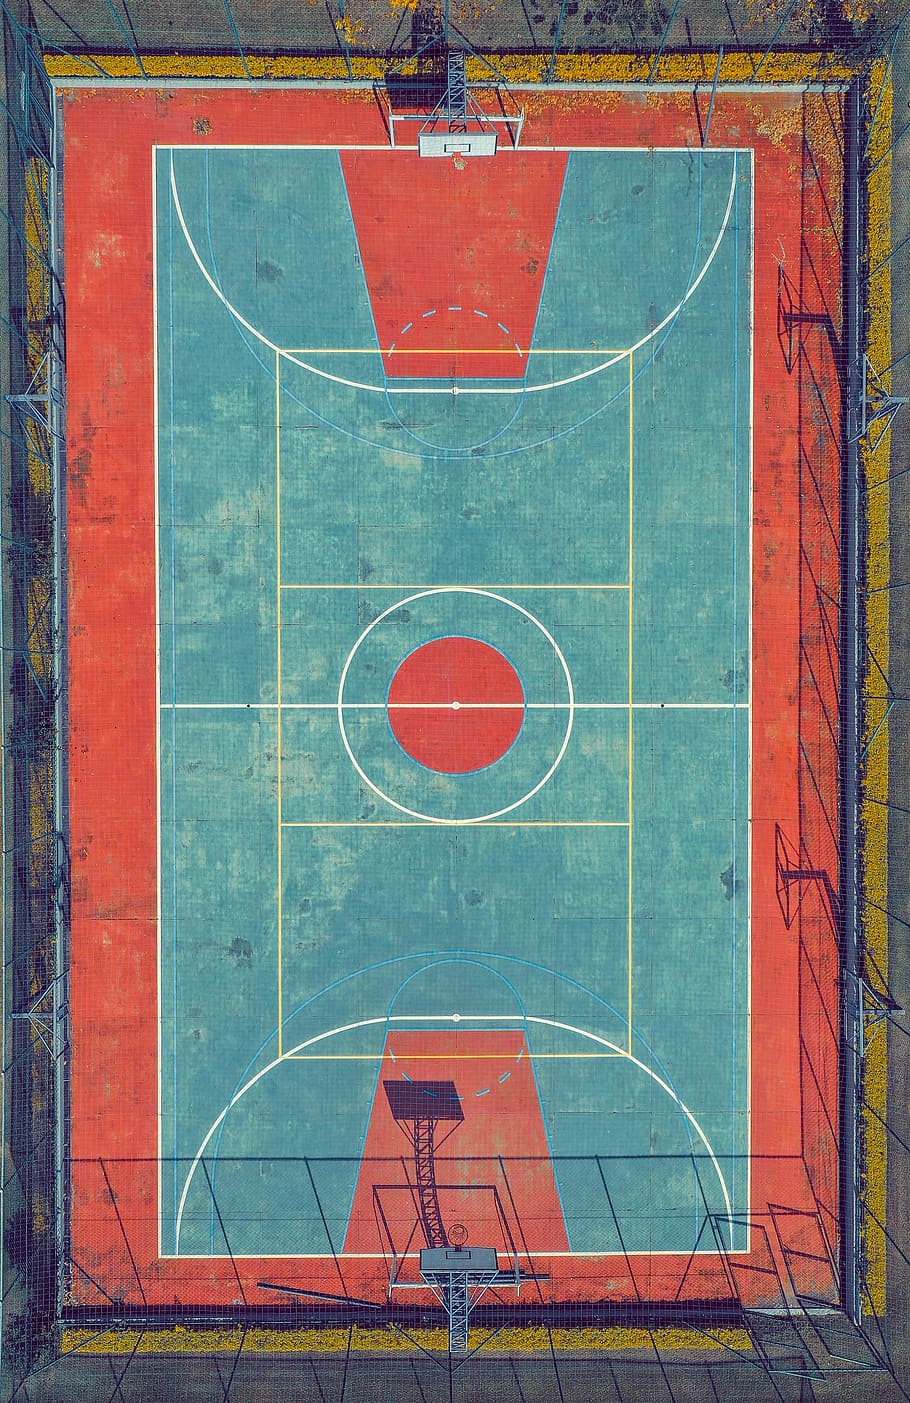 Hd Wallpaper Top View Photo Of Basketball Court Birds Eye View